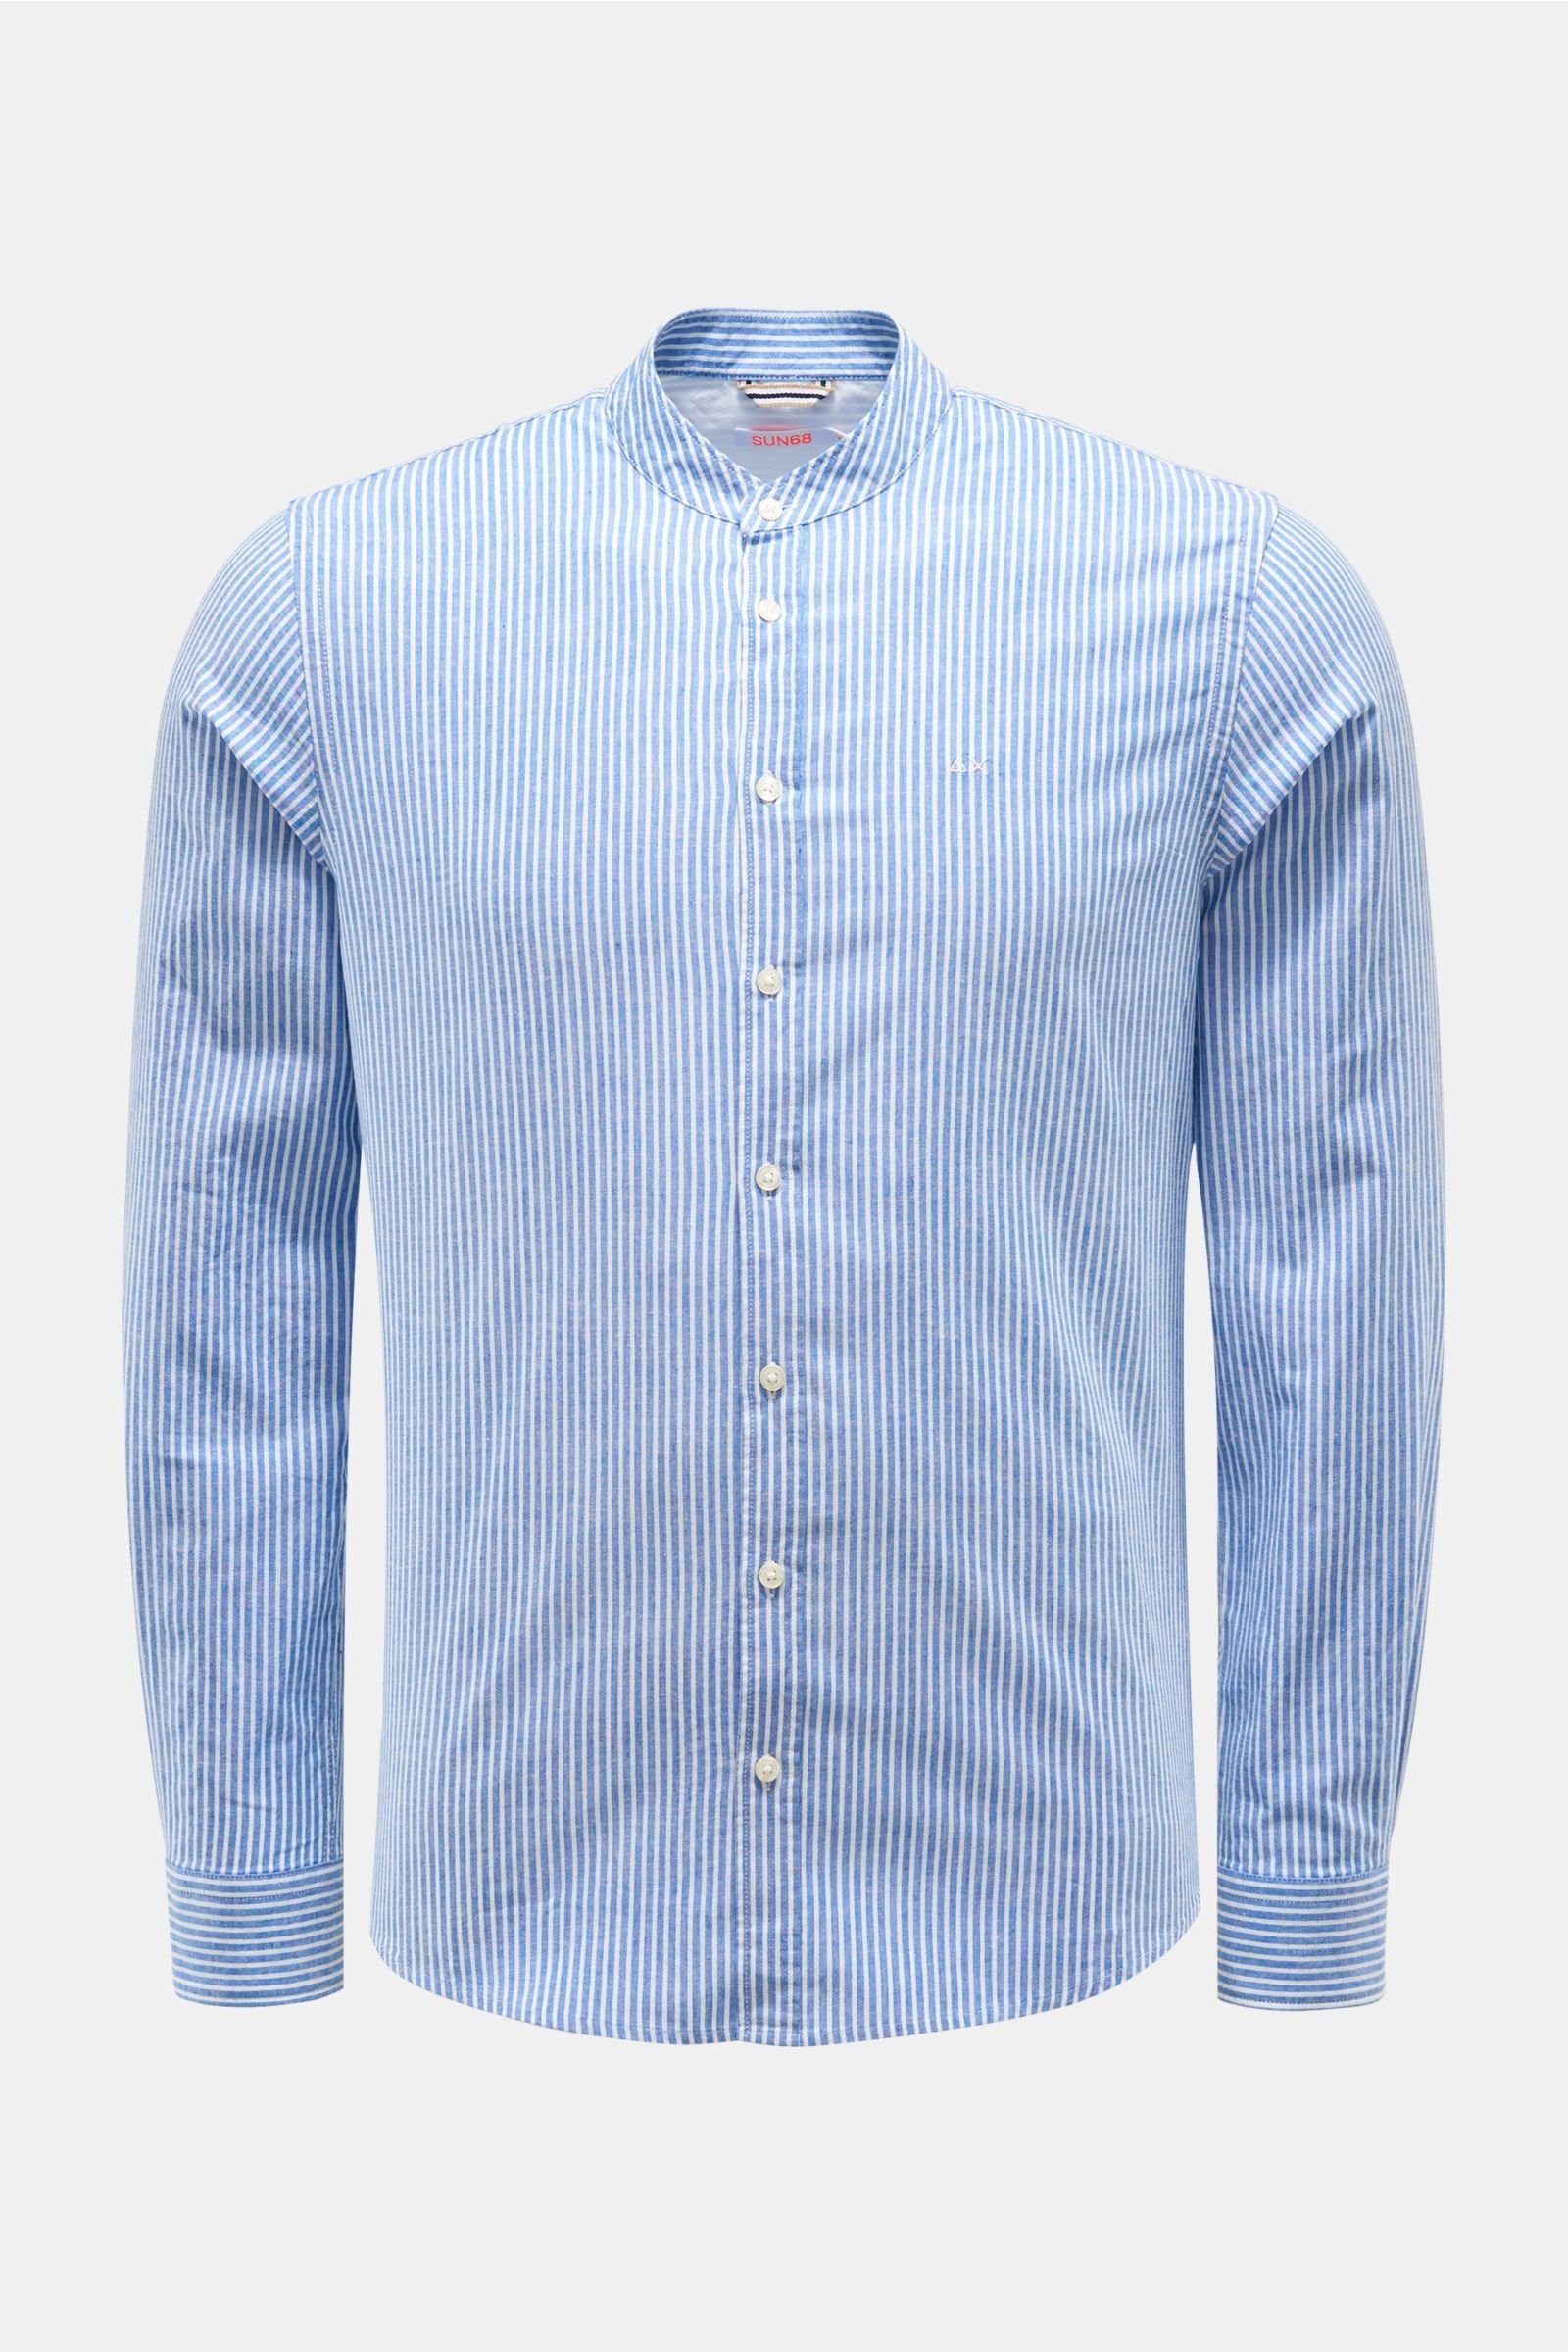 Casual shirt grandad-collar smoky blue/white striped